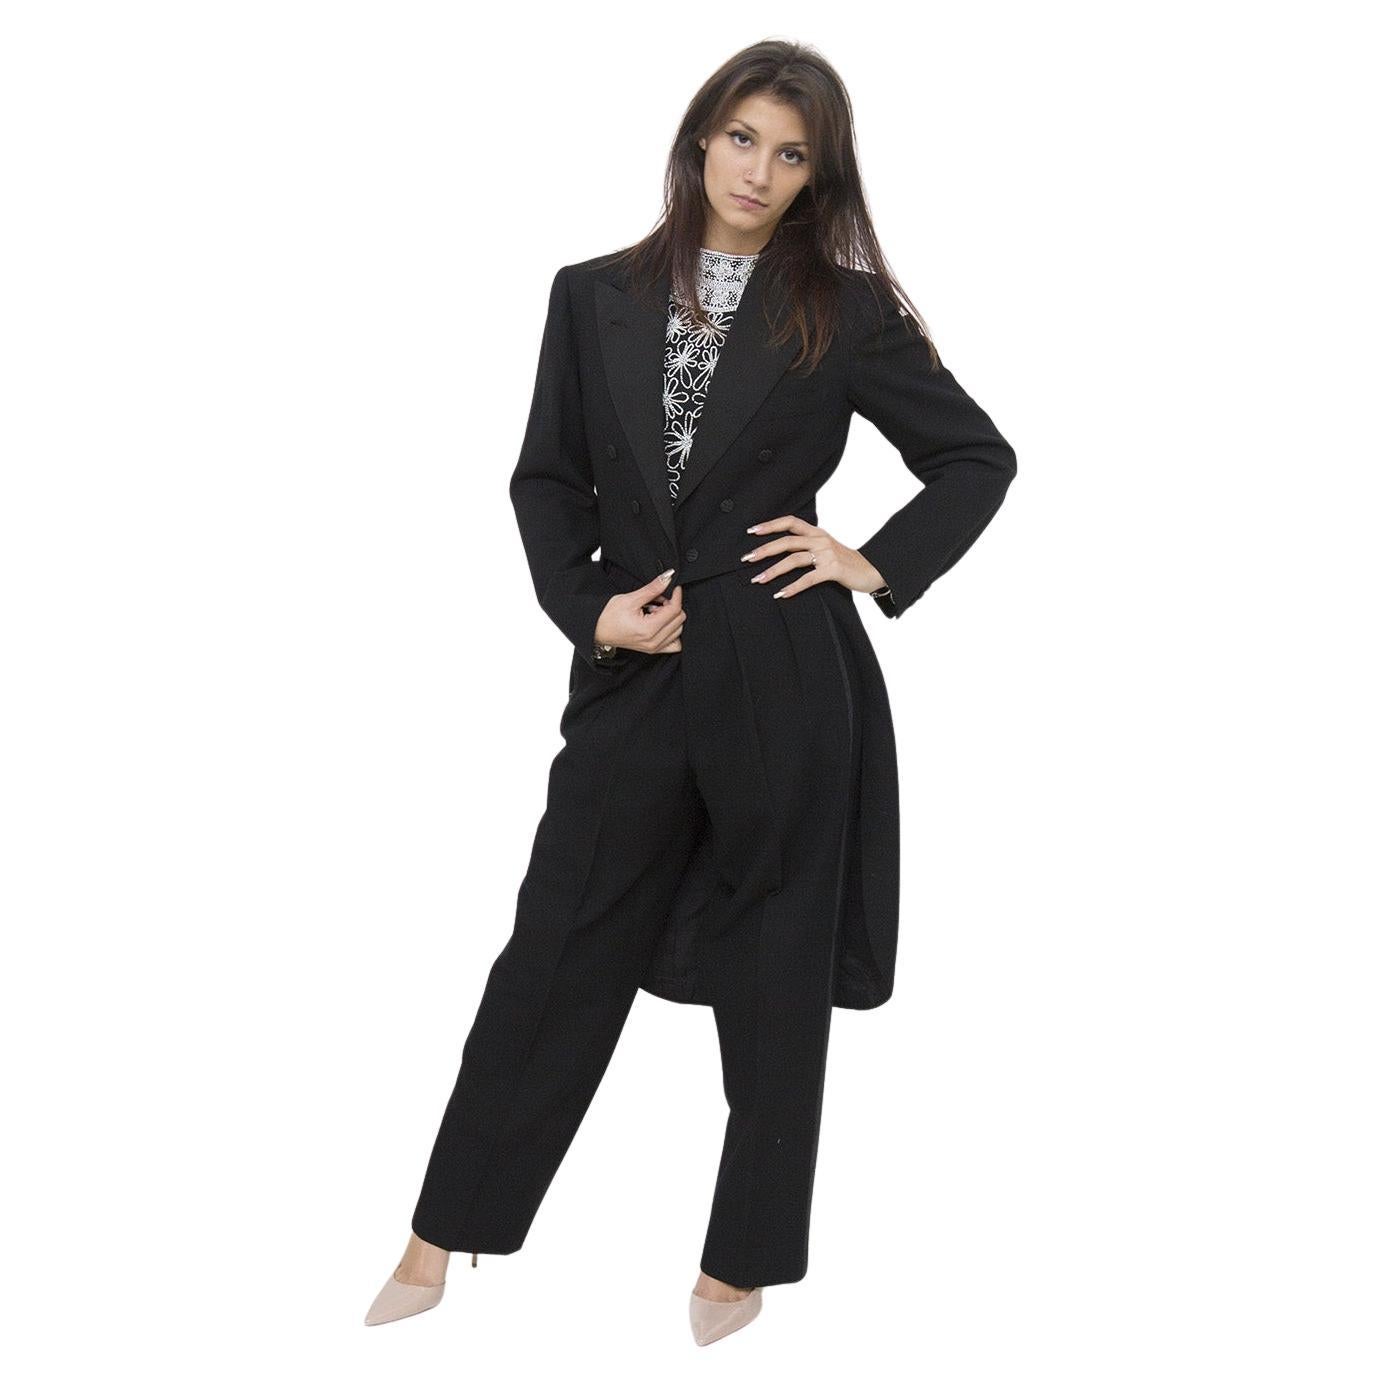 Very Elegant Vintage Black Tight Suit For Sale